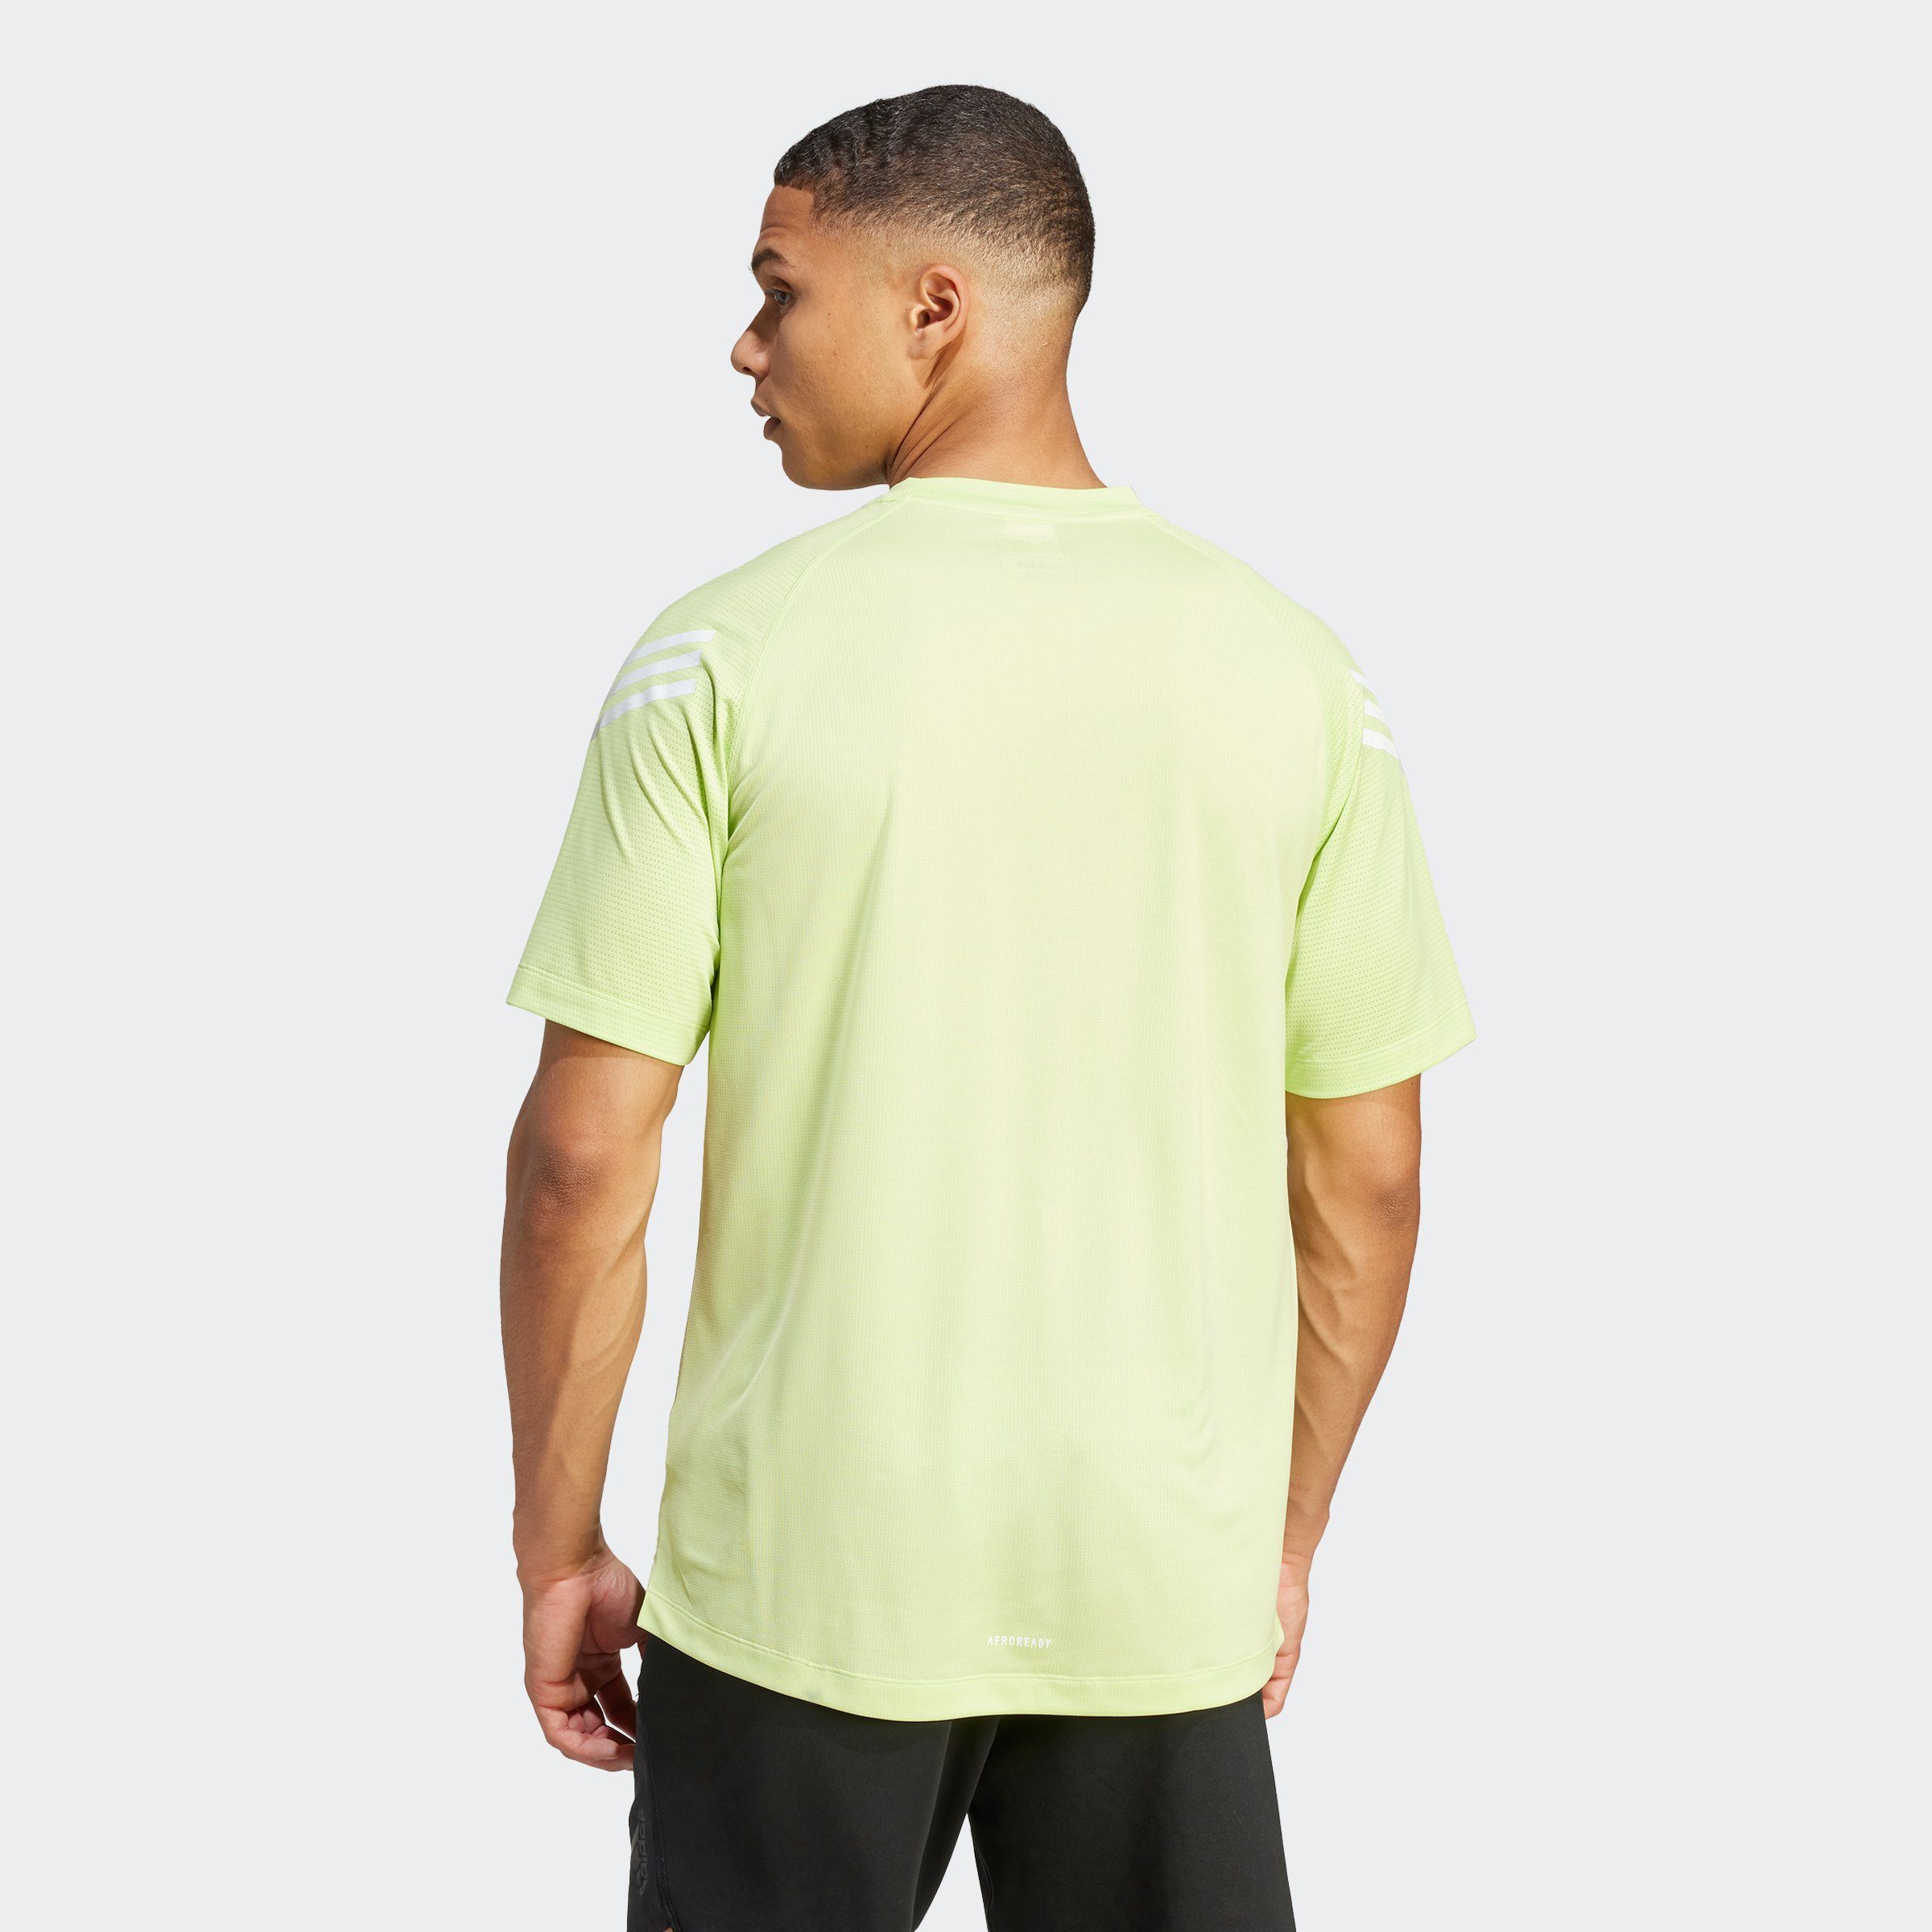 Pulse adidas / Lime Silver Performance ICONS 3-STREIFEN Pebble T-Shirt / TRAINING White TRAIN